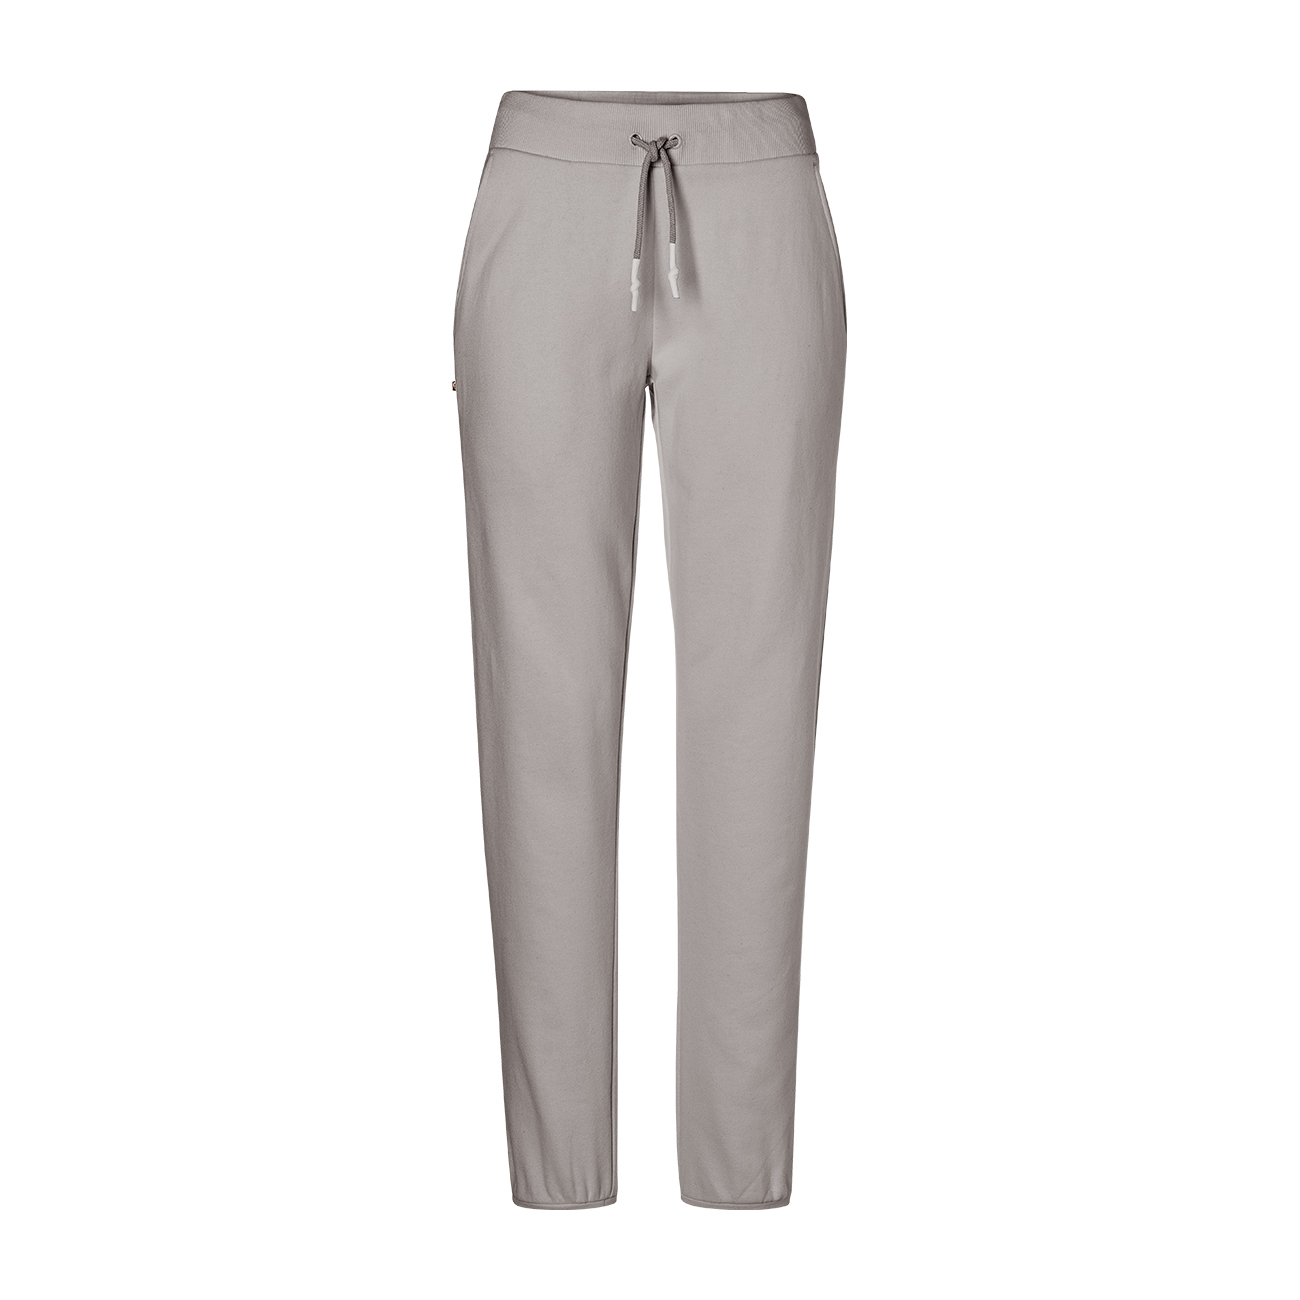 clay grey - Jogging AIGNER Fashion Club Pants - - Women